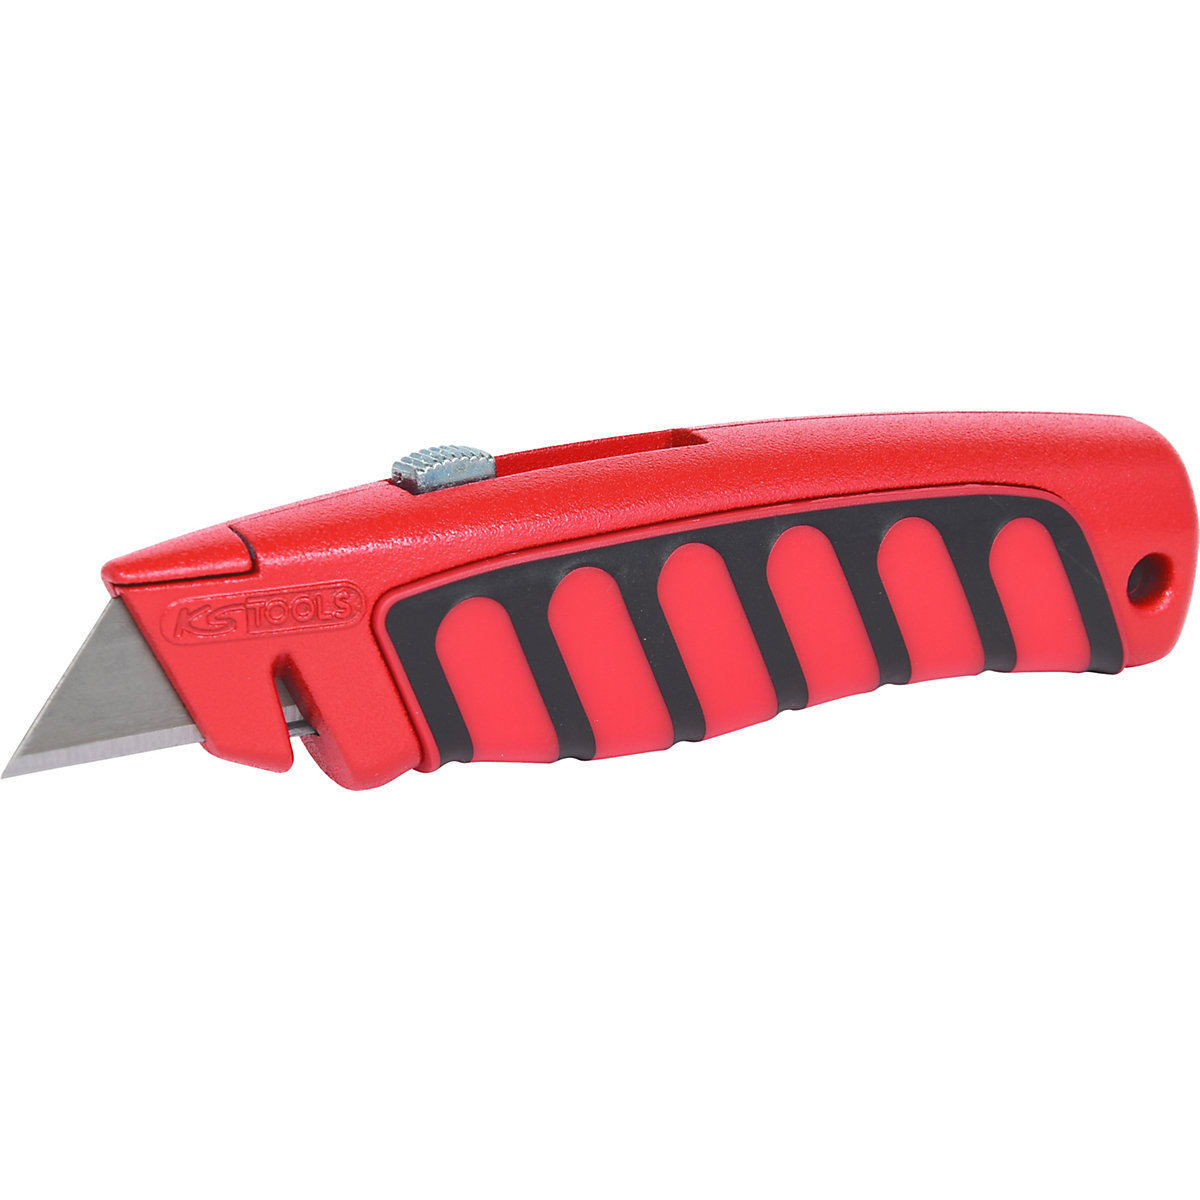 Professional universal knife – KS Tools